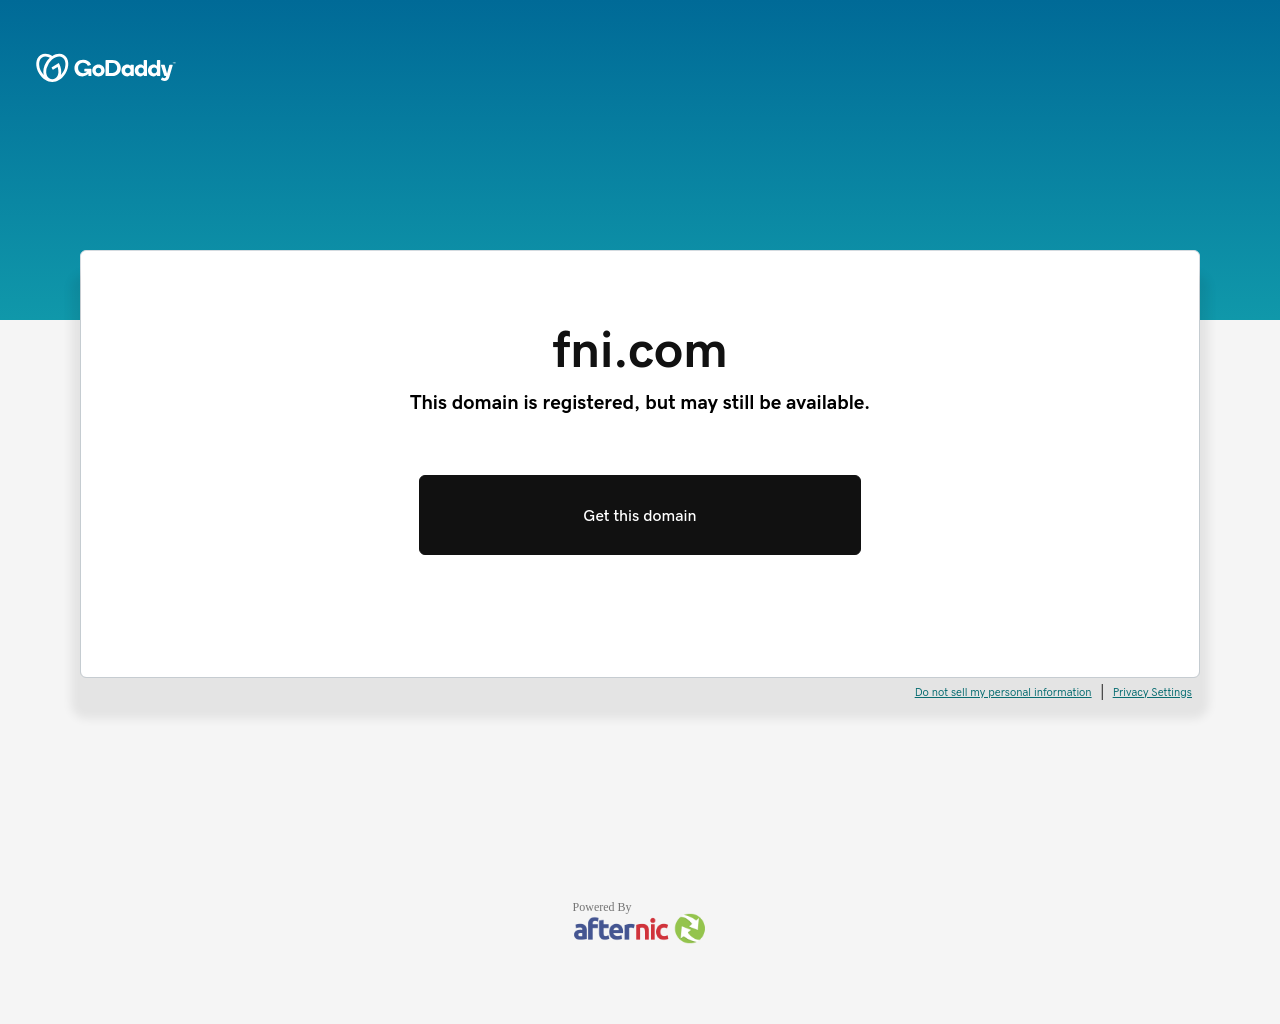 fni.com